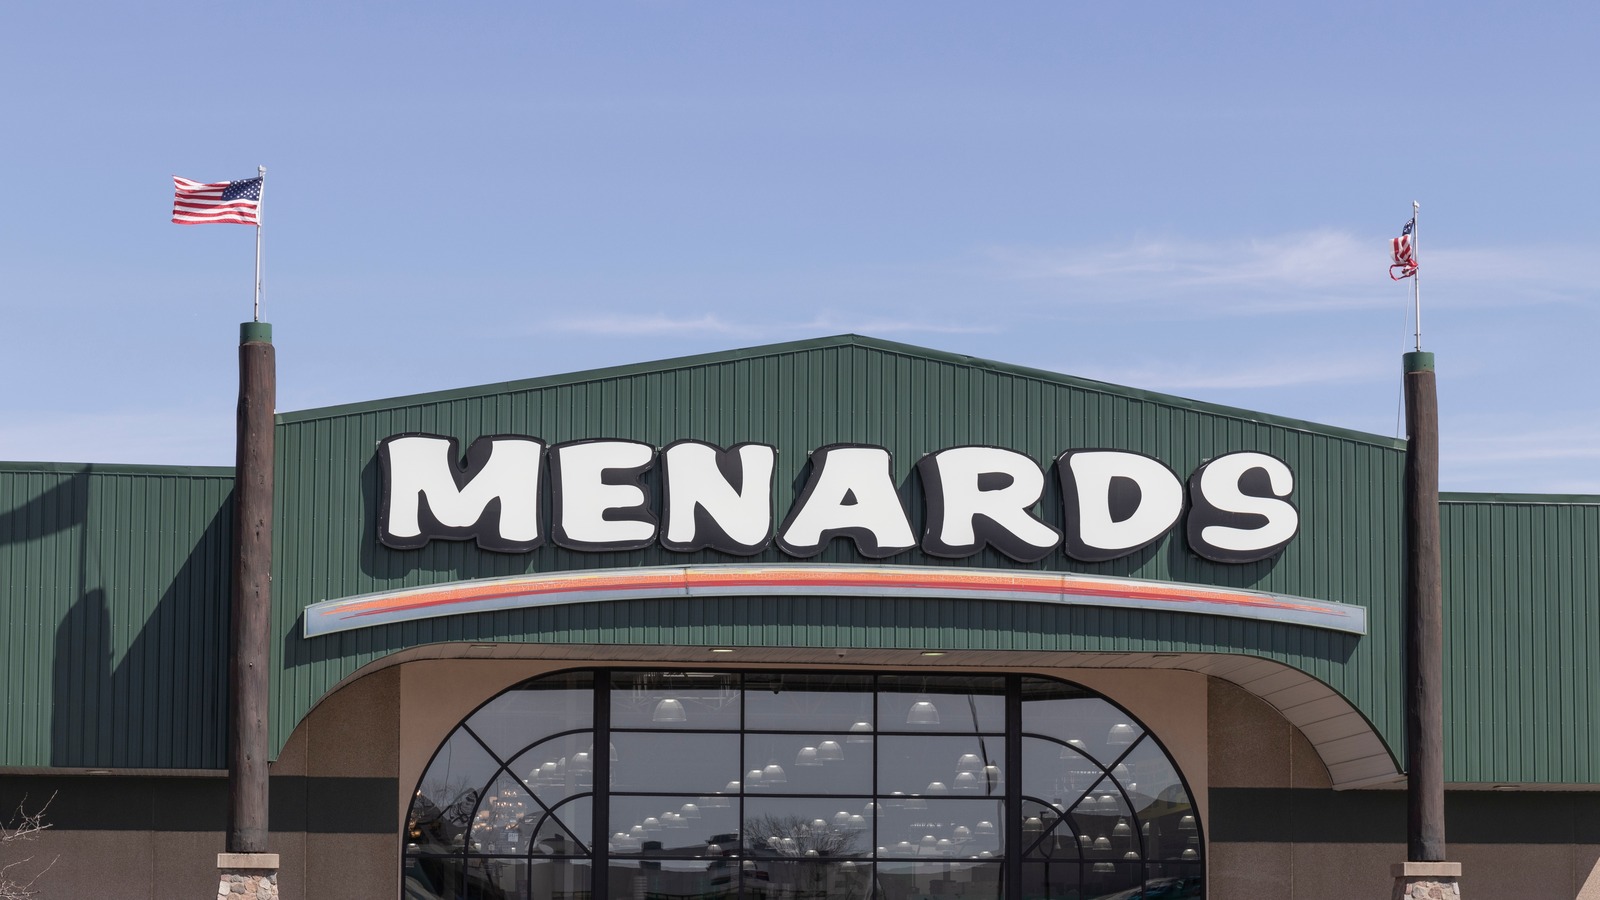 Summer Savings at Menards®